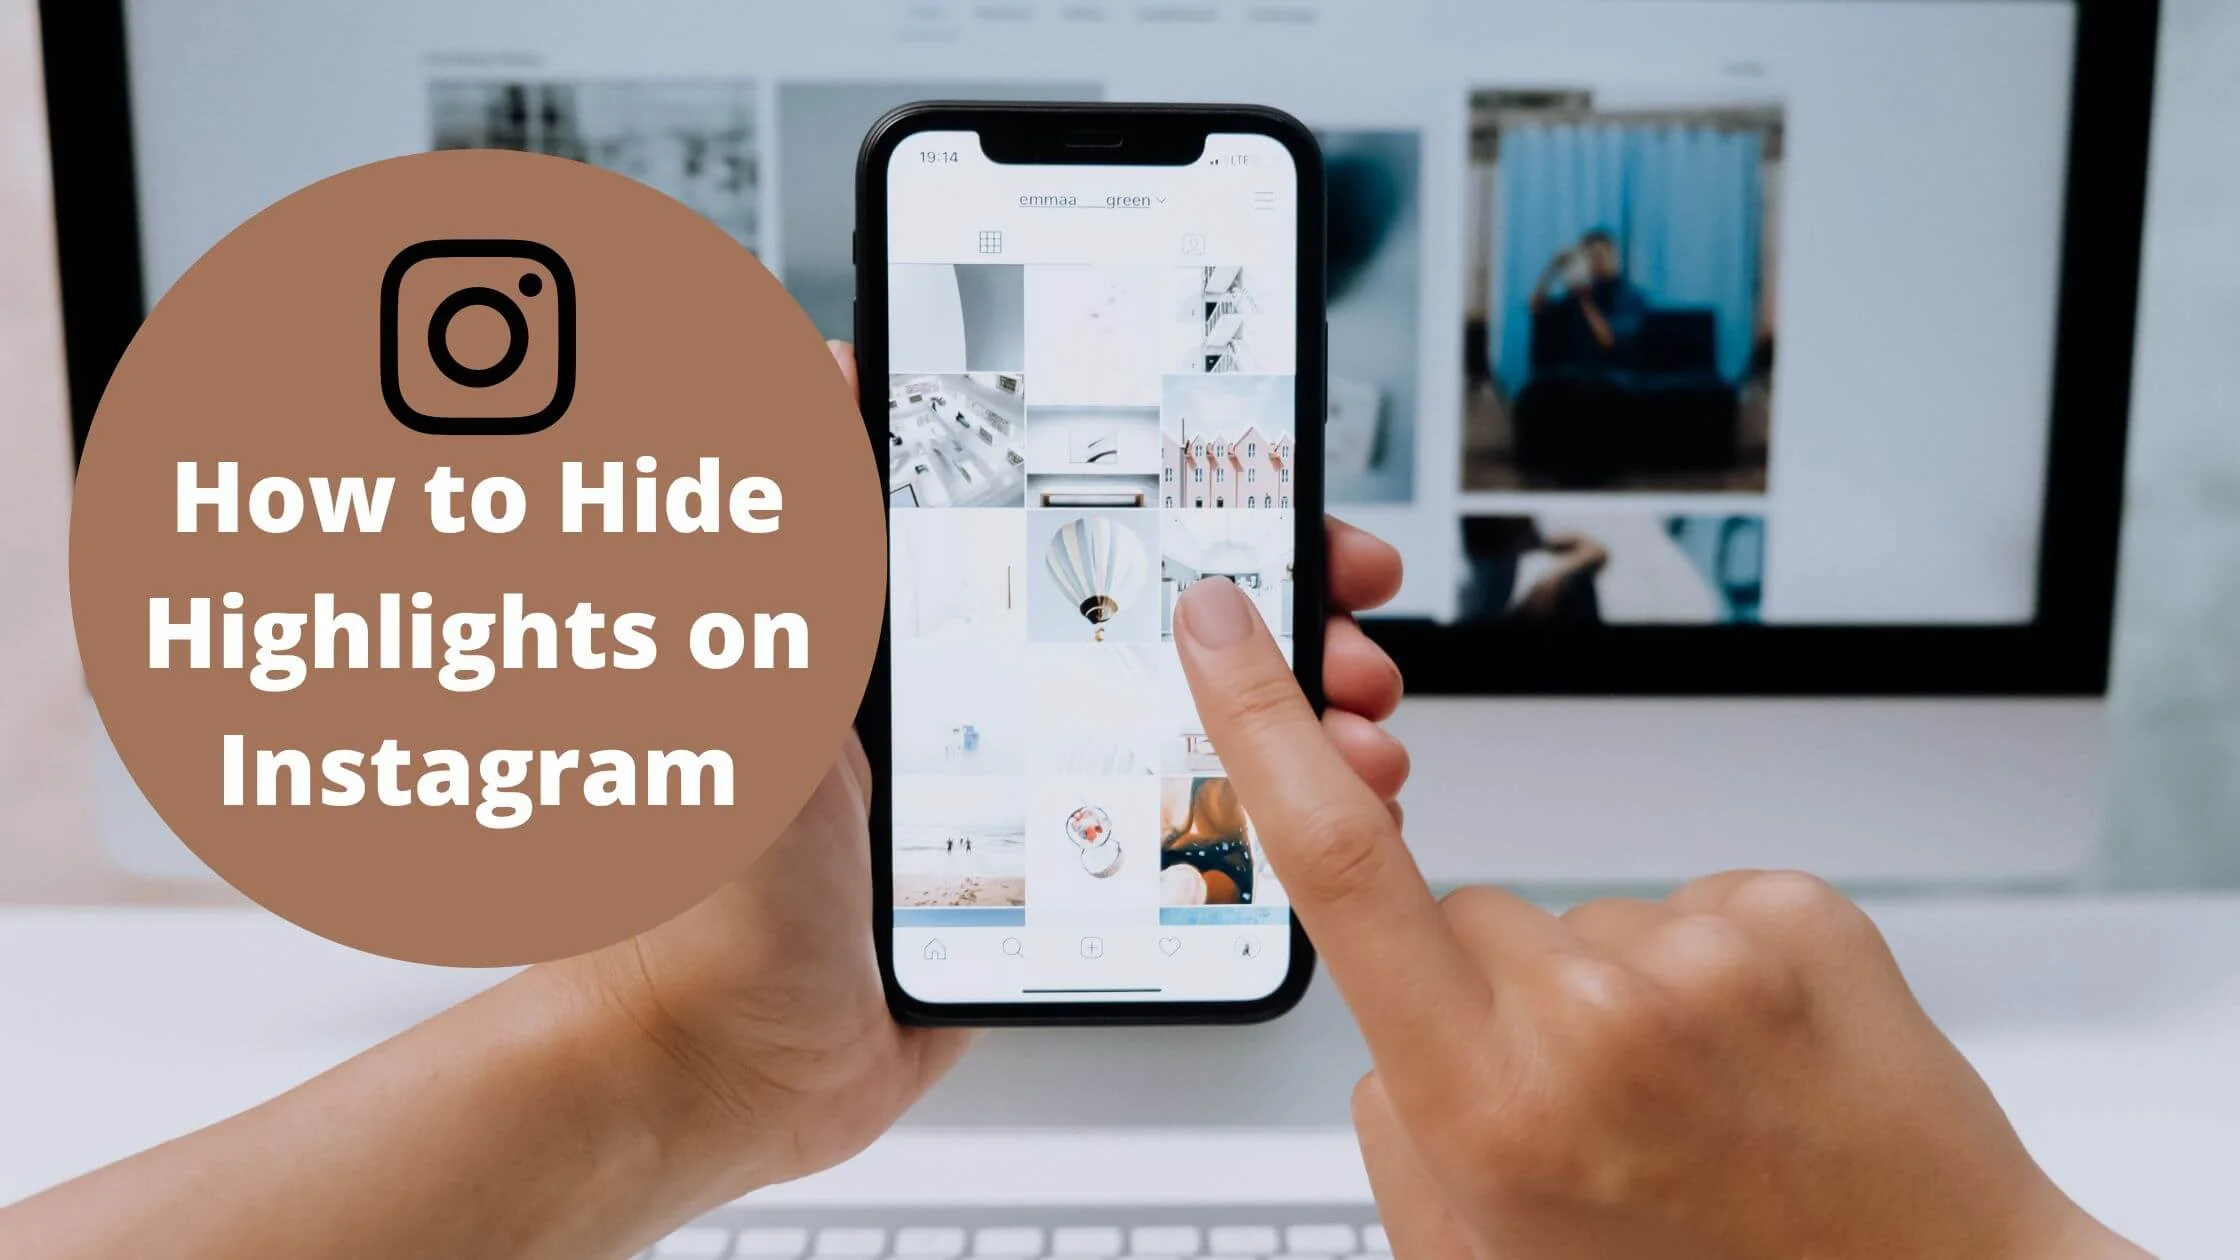 Hide Highlights on Instagram